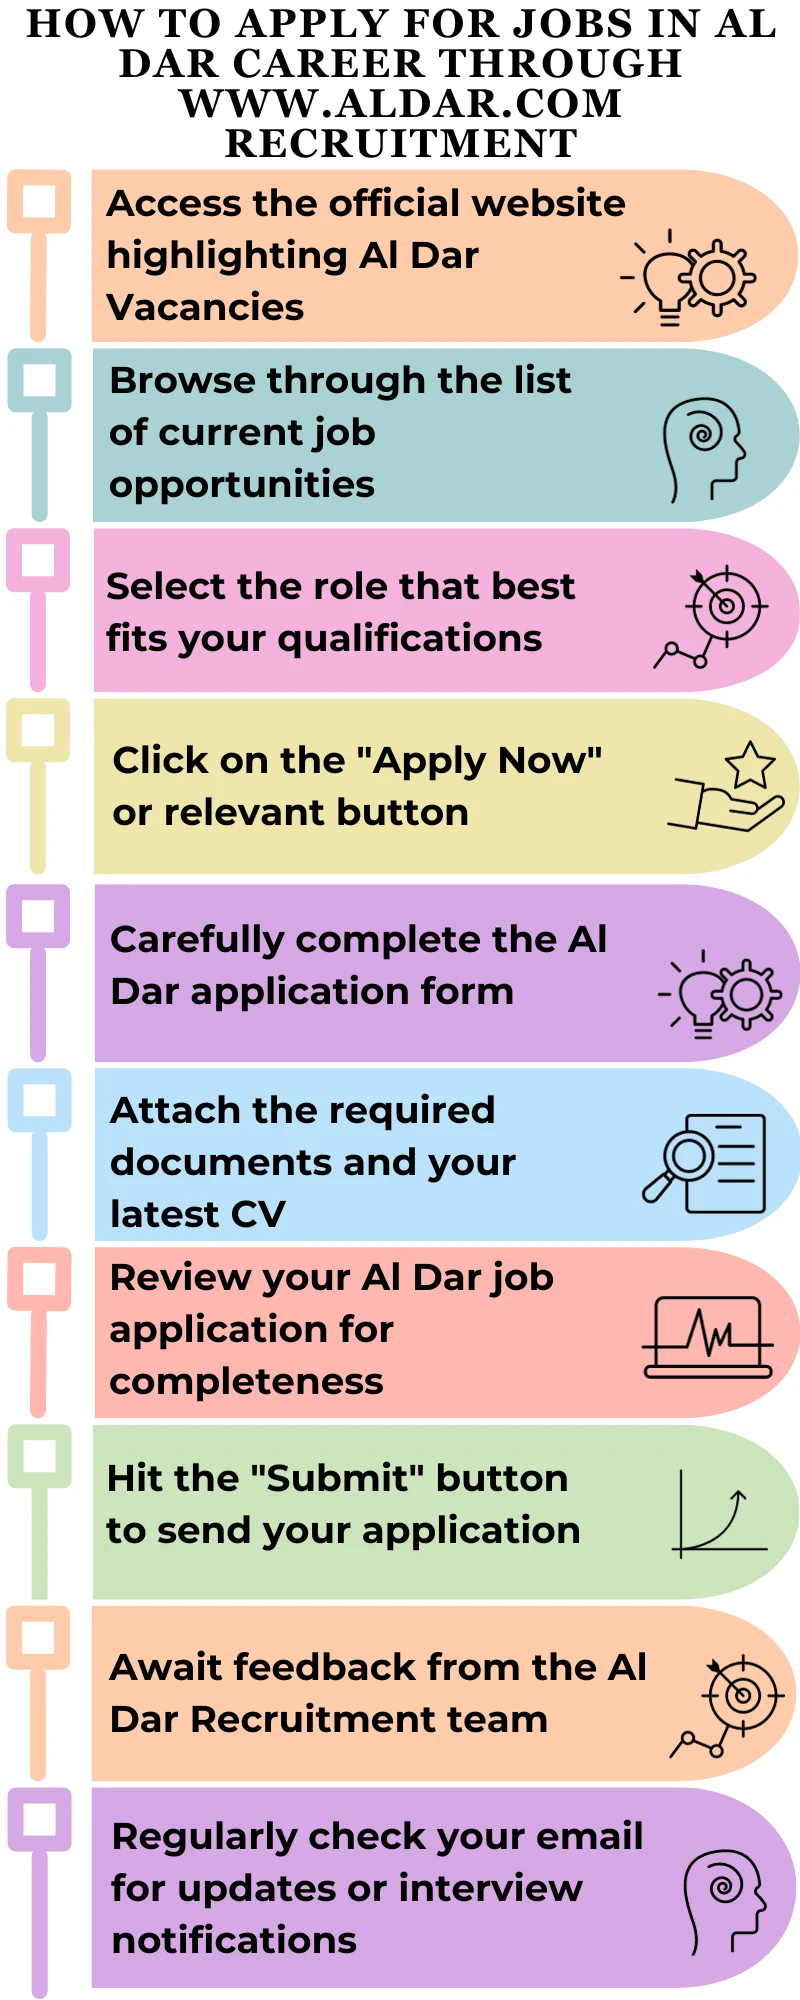 How to Apply for Jobs in Al Dar Career through www.aldar.com recruitment